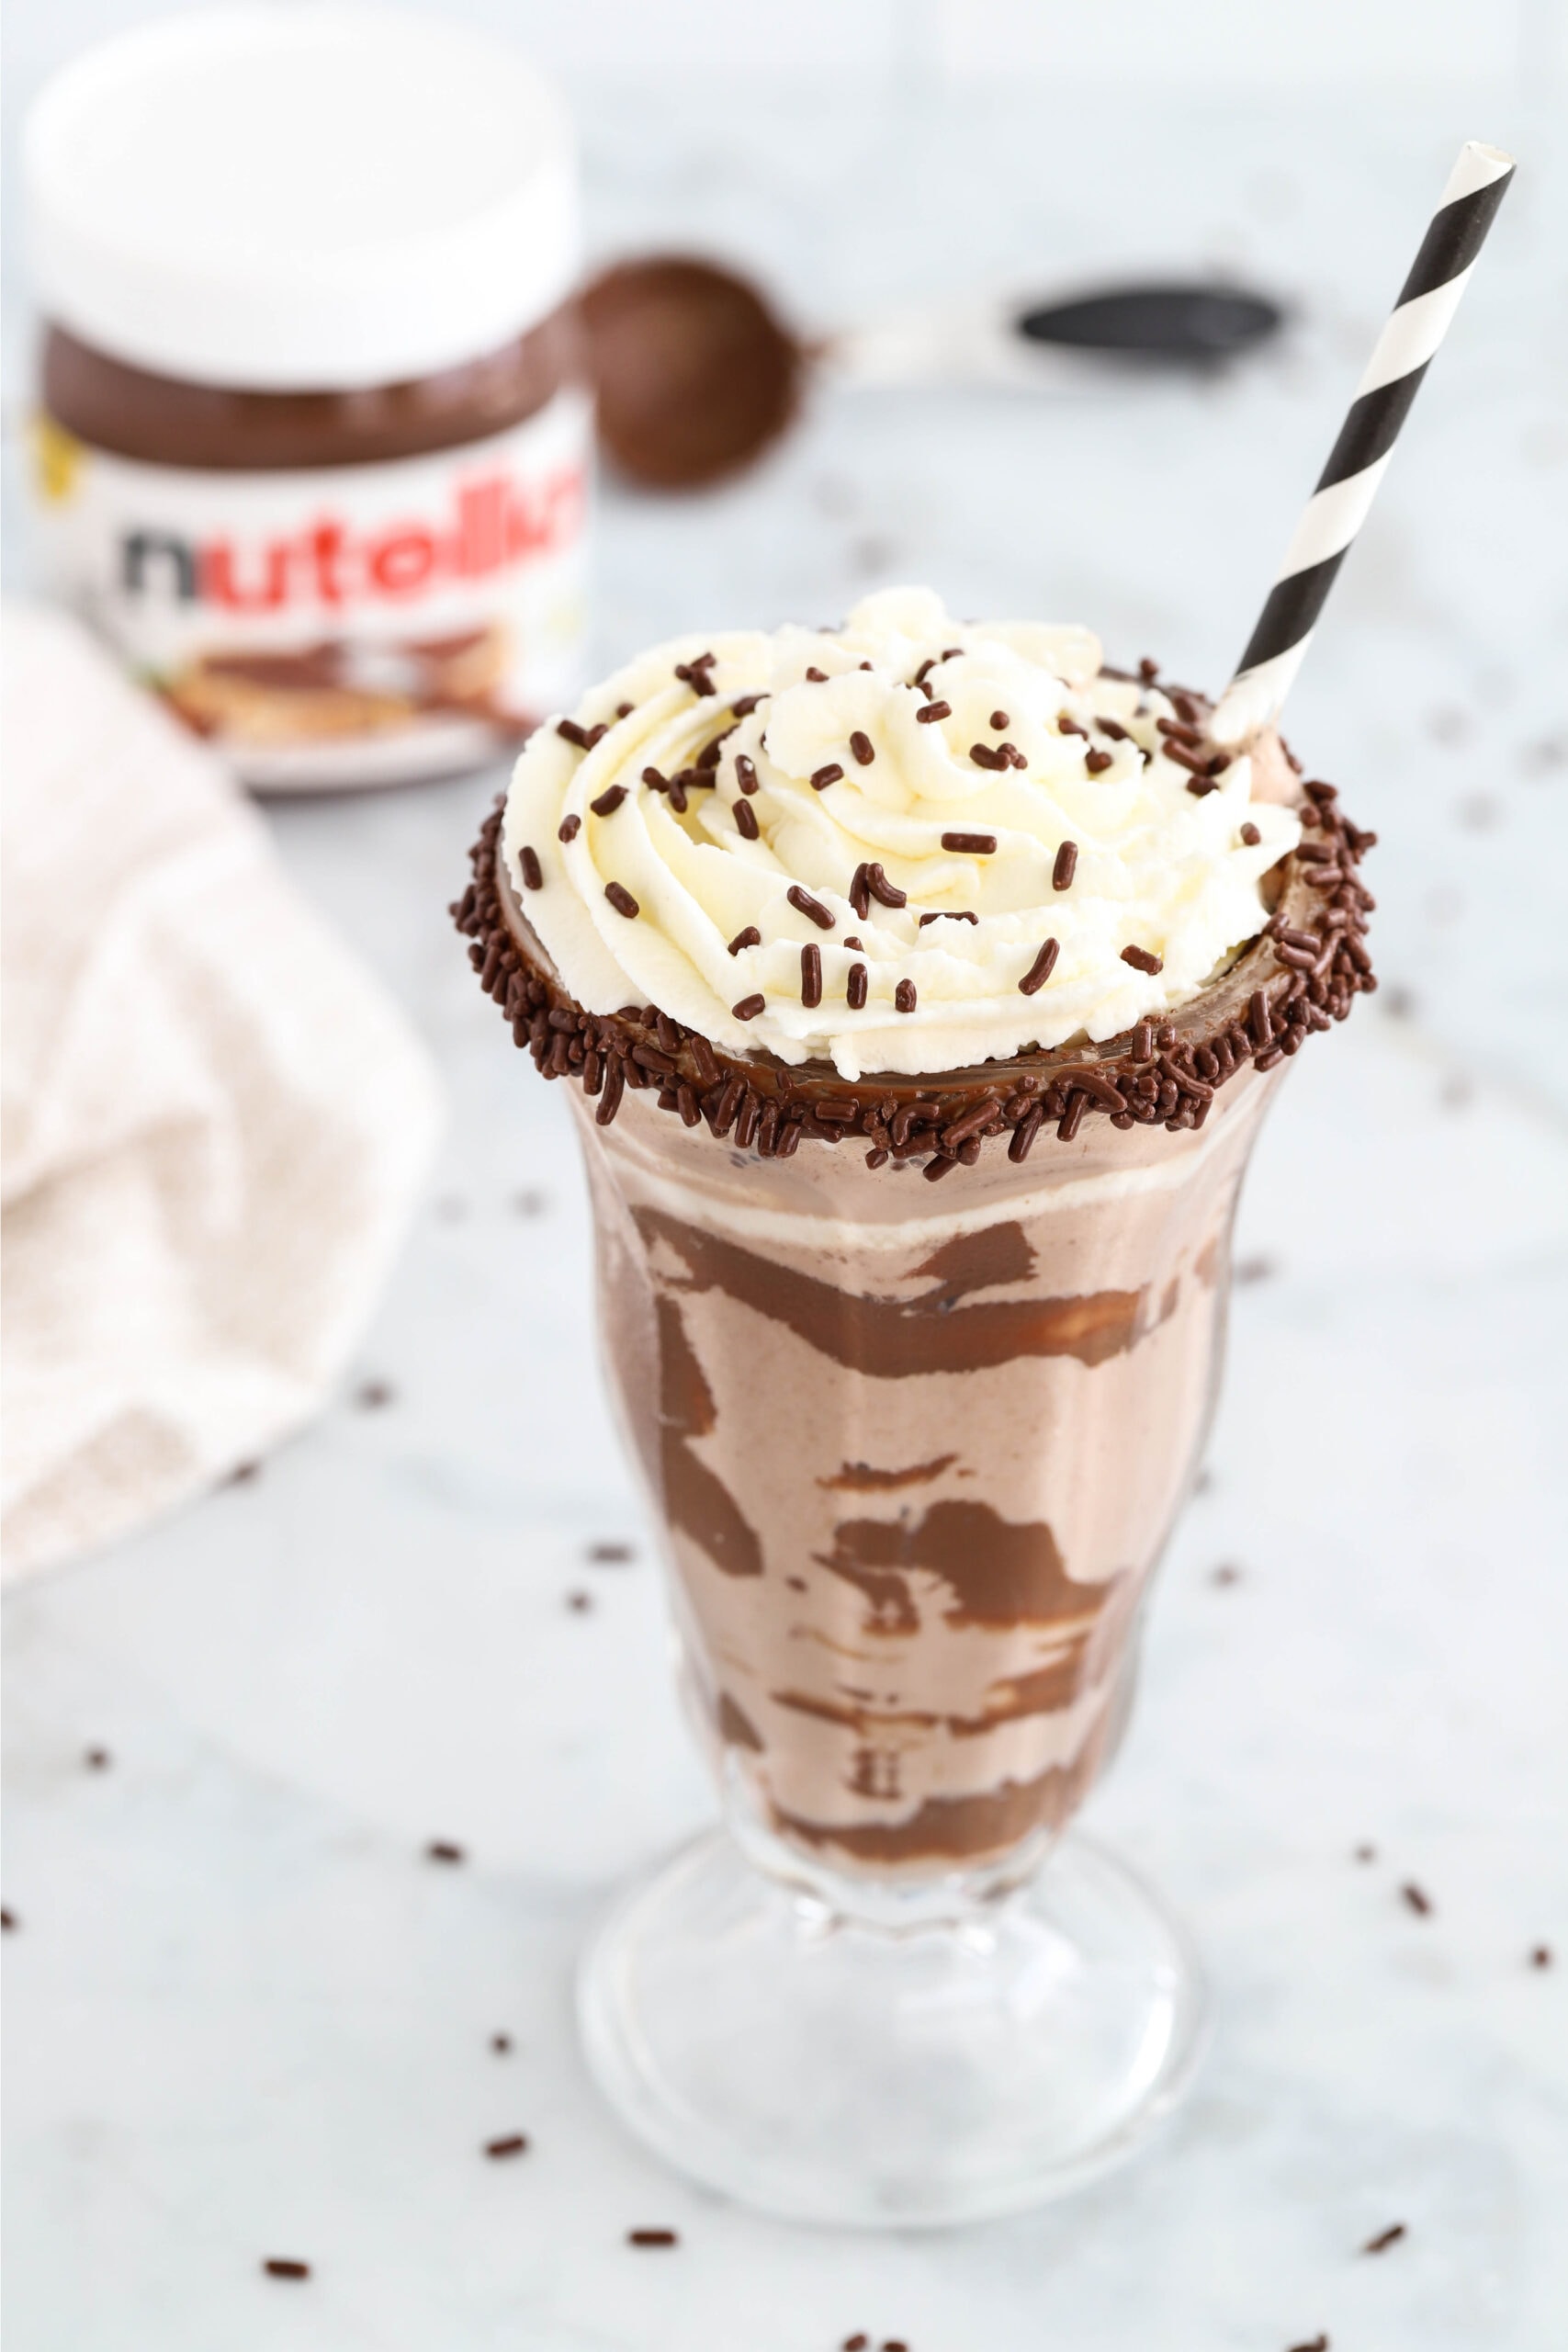 Easy Nutella milkshake from an angle